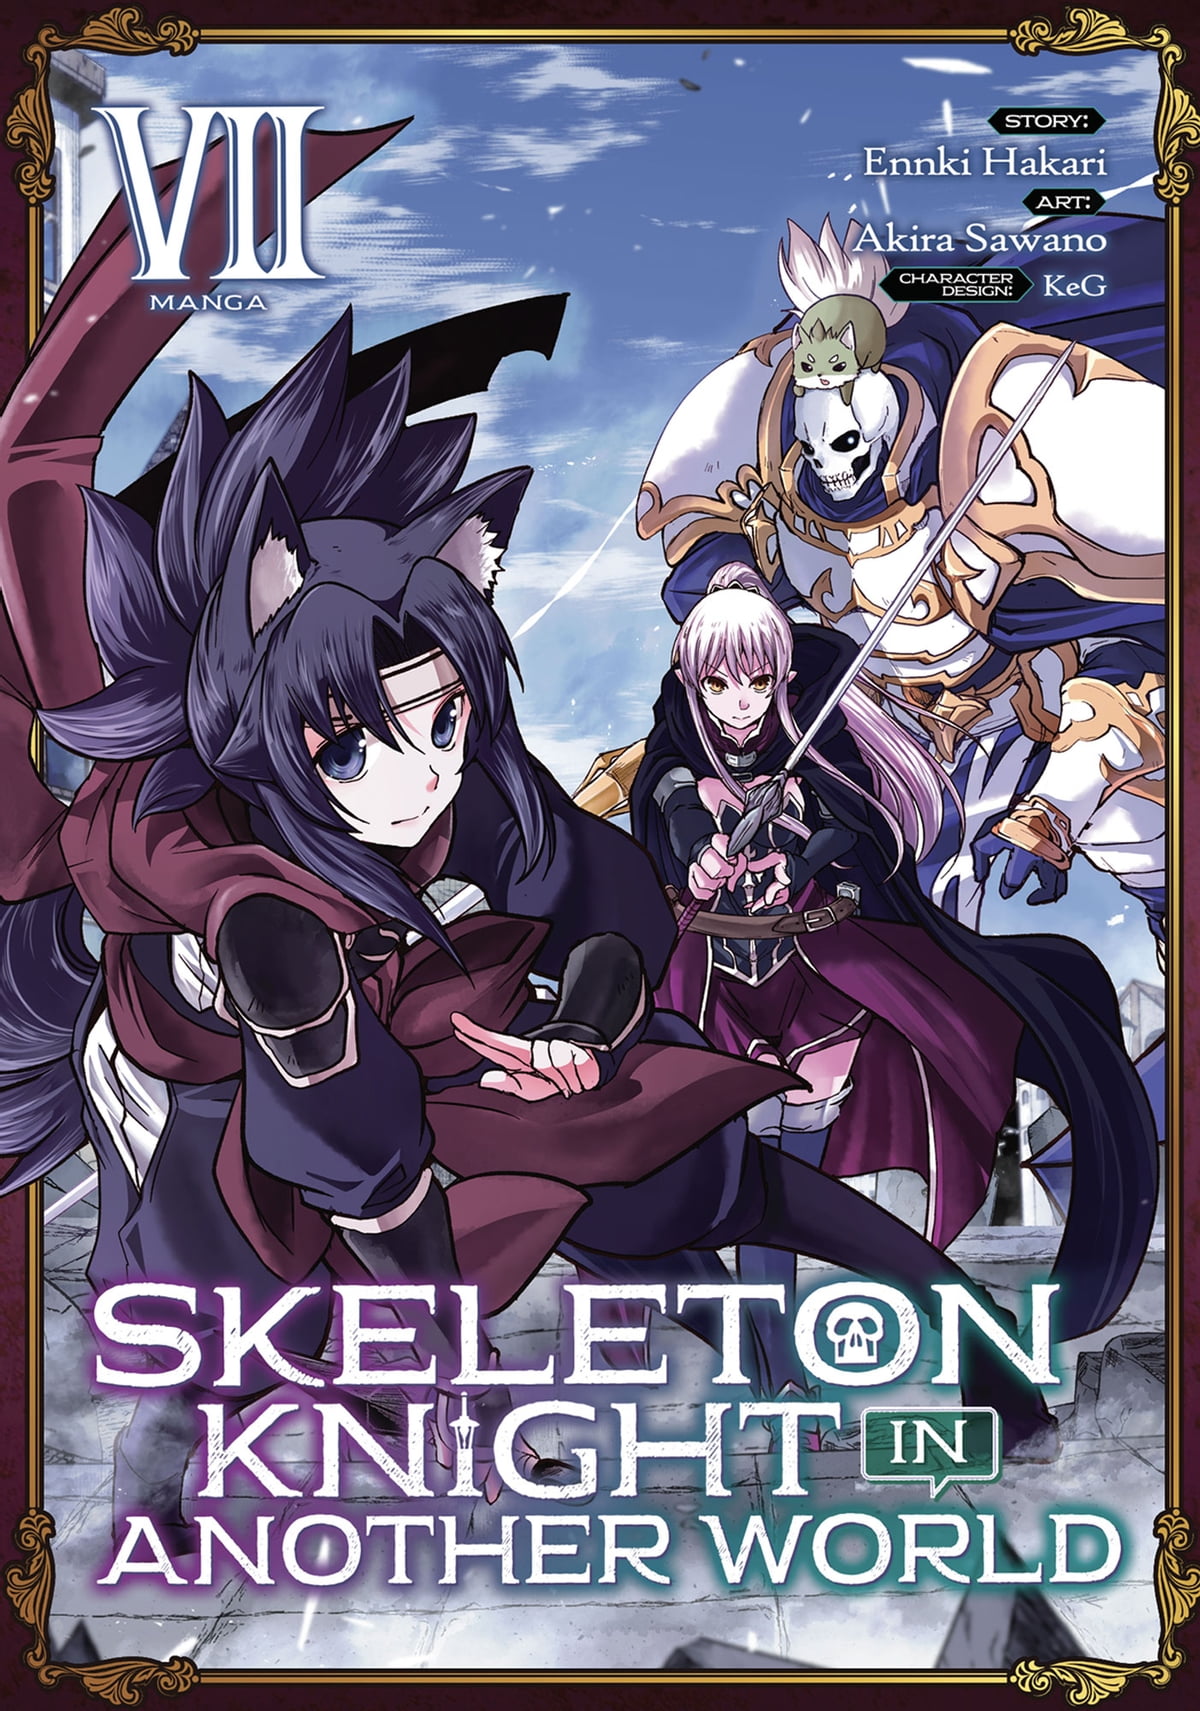 Skeleton Knight in Another World (Manga) Vol. 7 eBook by Ennki Hakari. Rakuten Kobo Ireland